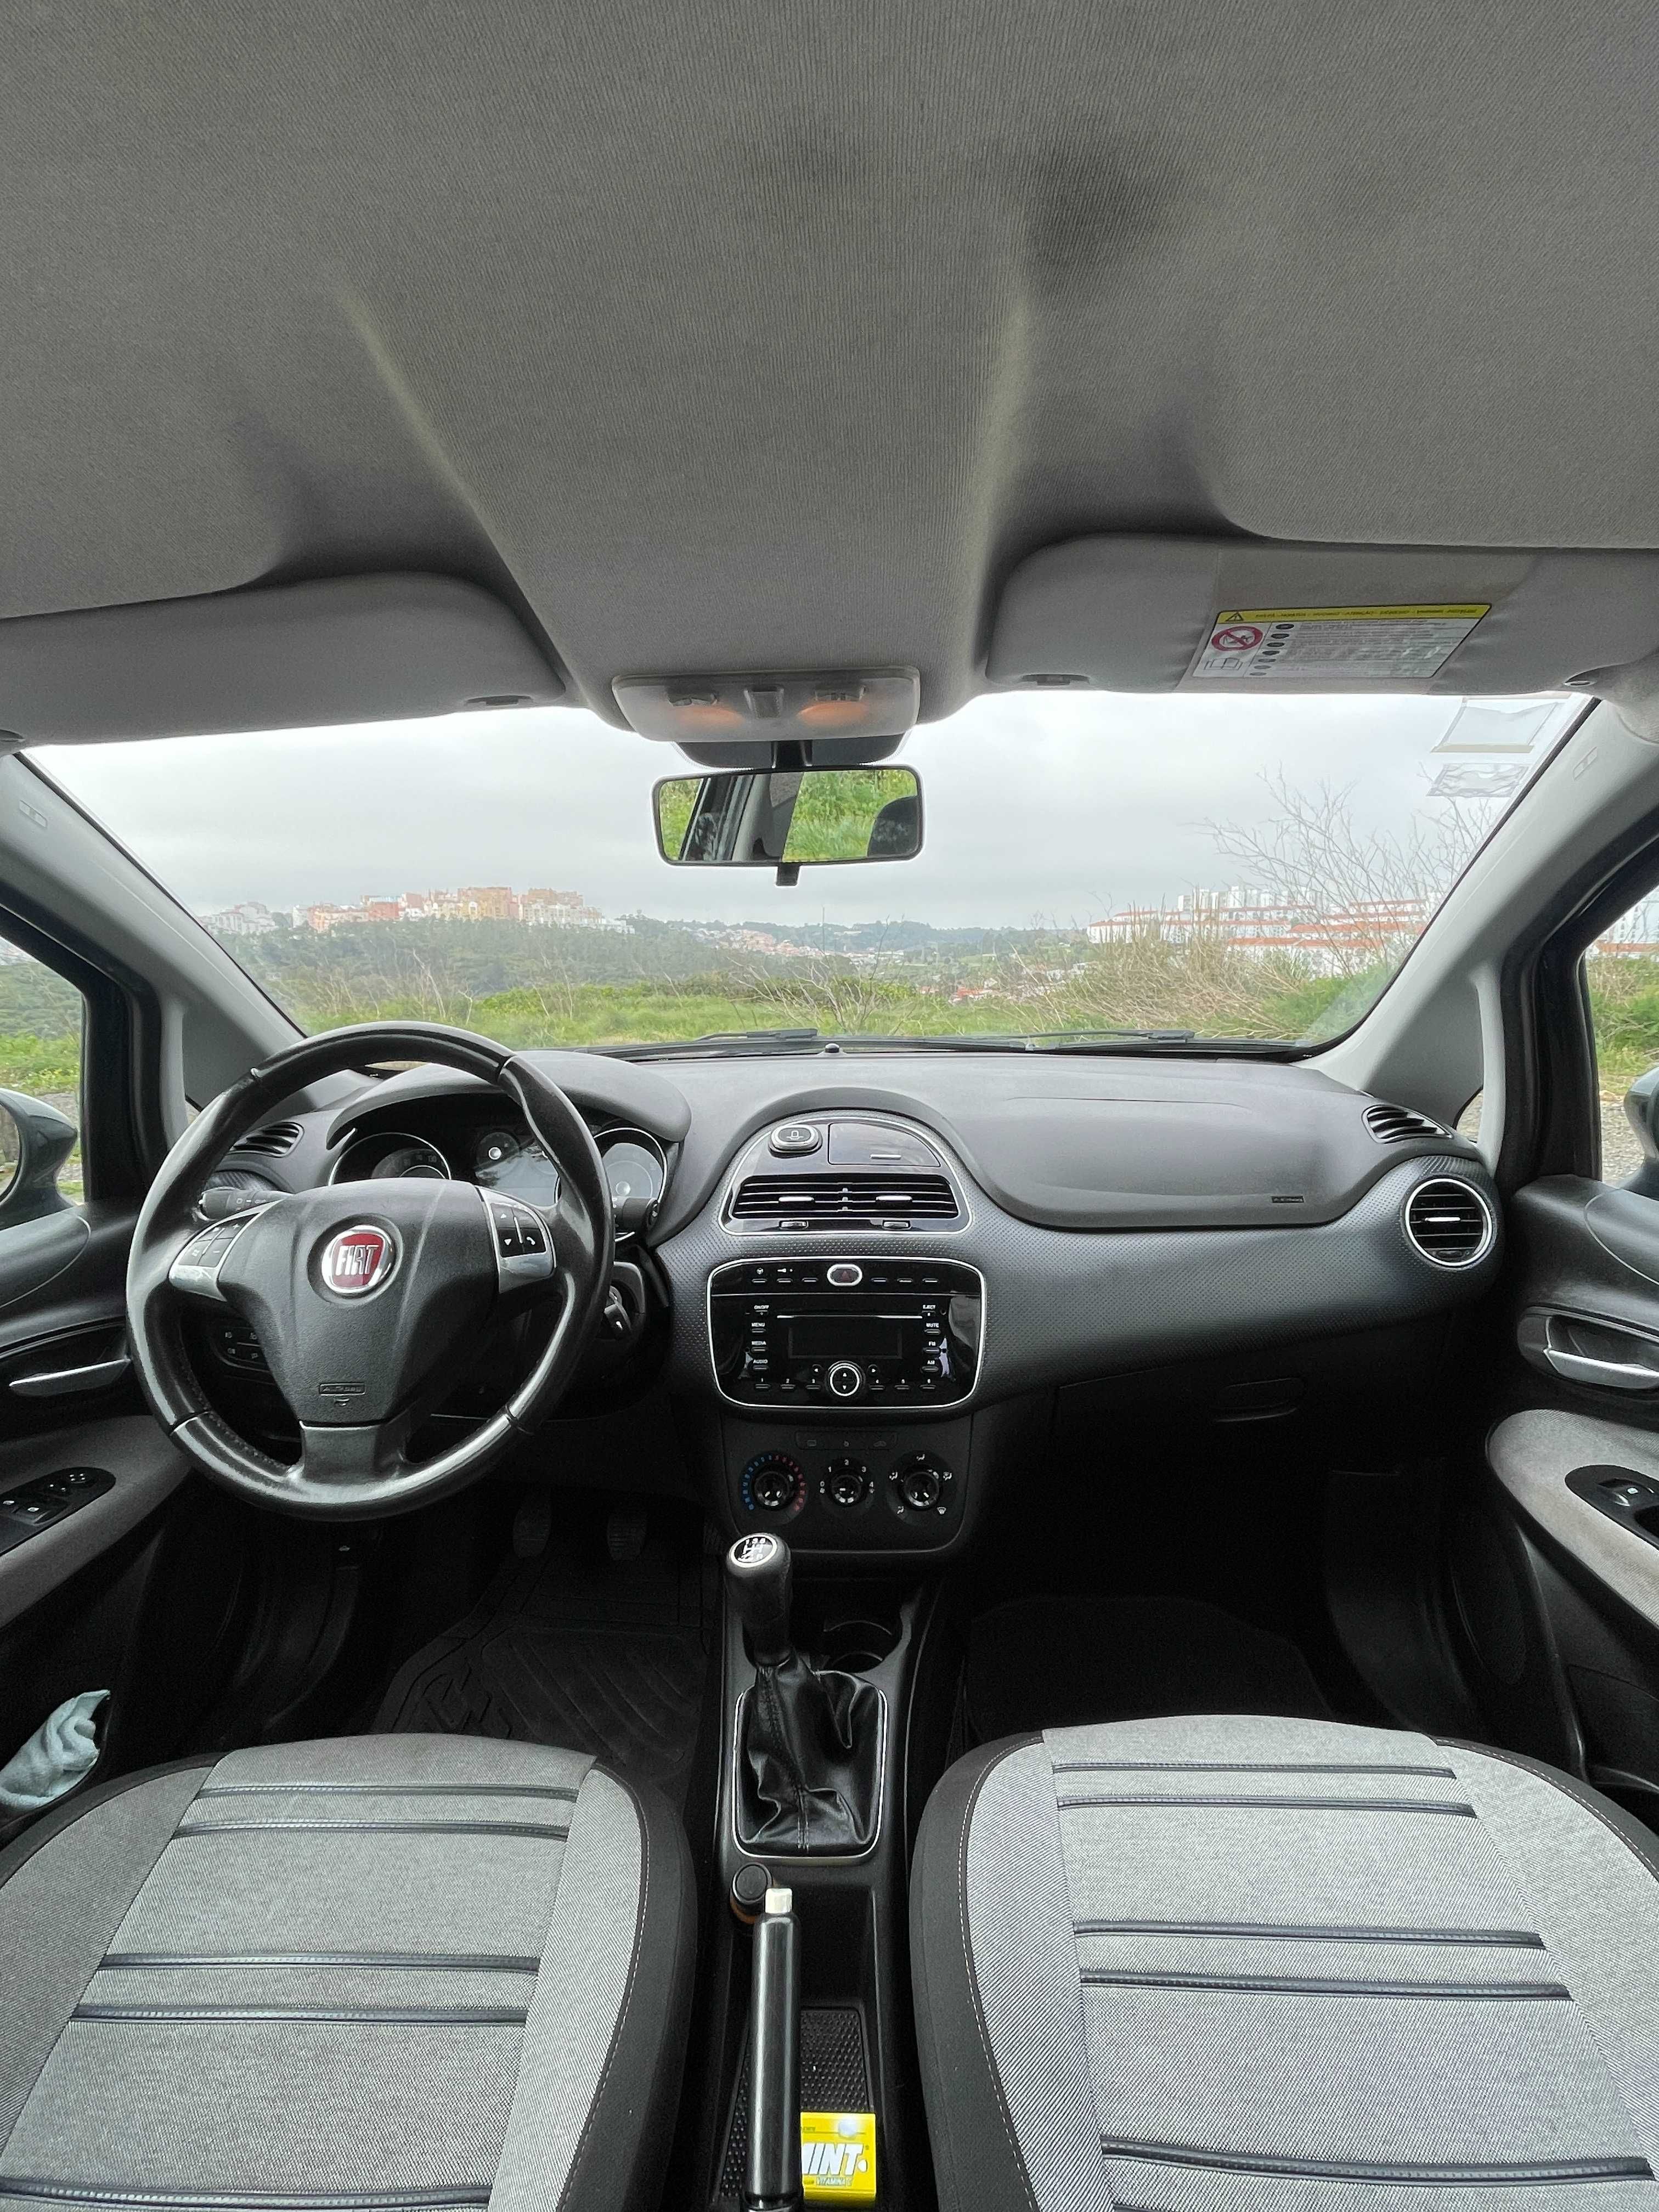 Fiat Punto Evo 1.3 Diesel MultiJet Nacional e Muito Economico